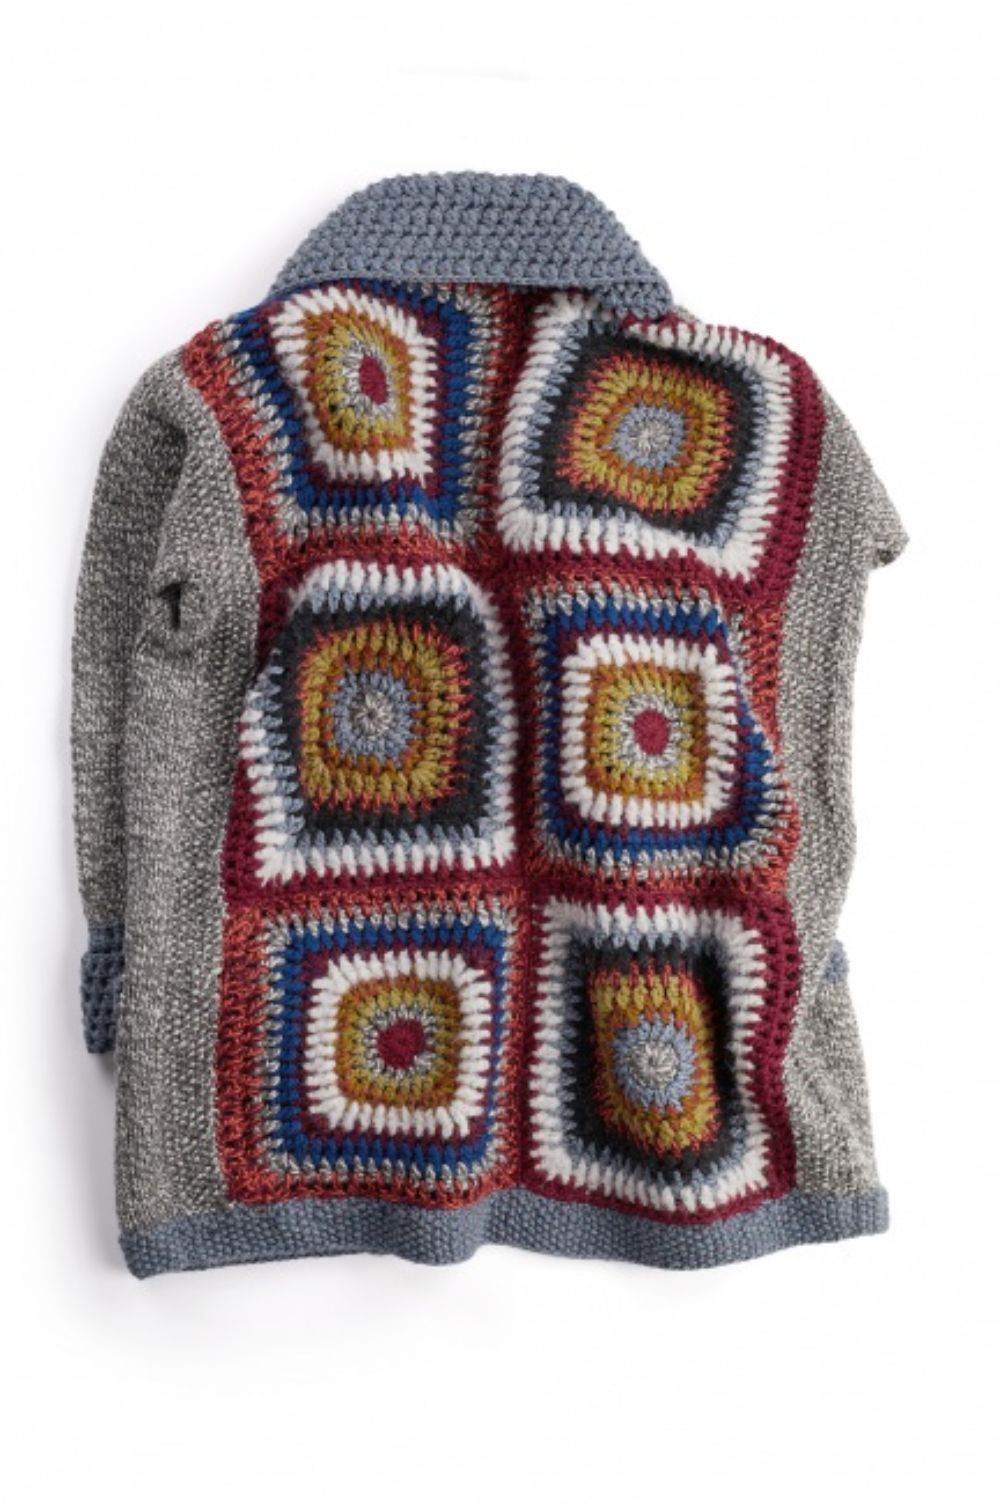 Crochet Chunky Knit Wool Cardigan Blue Grey Reversible